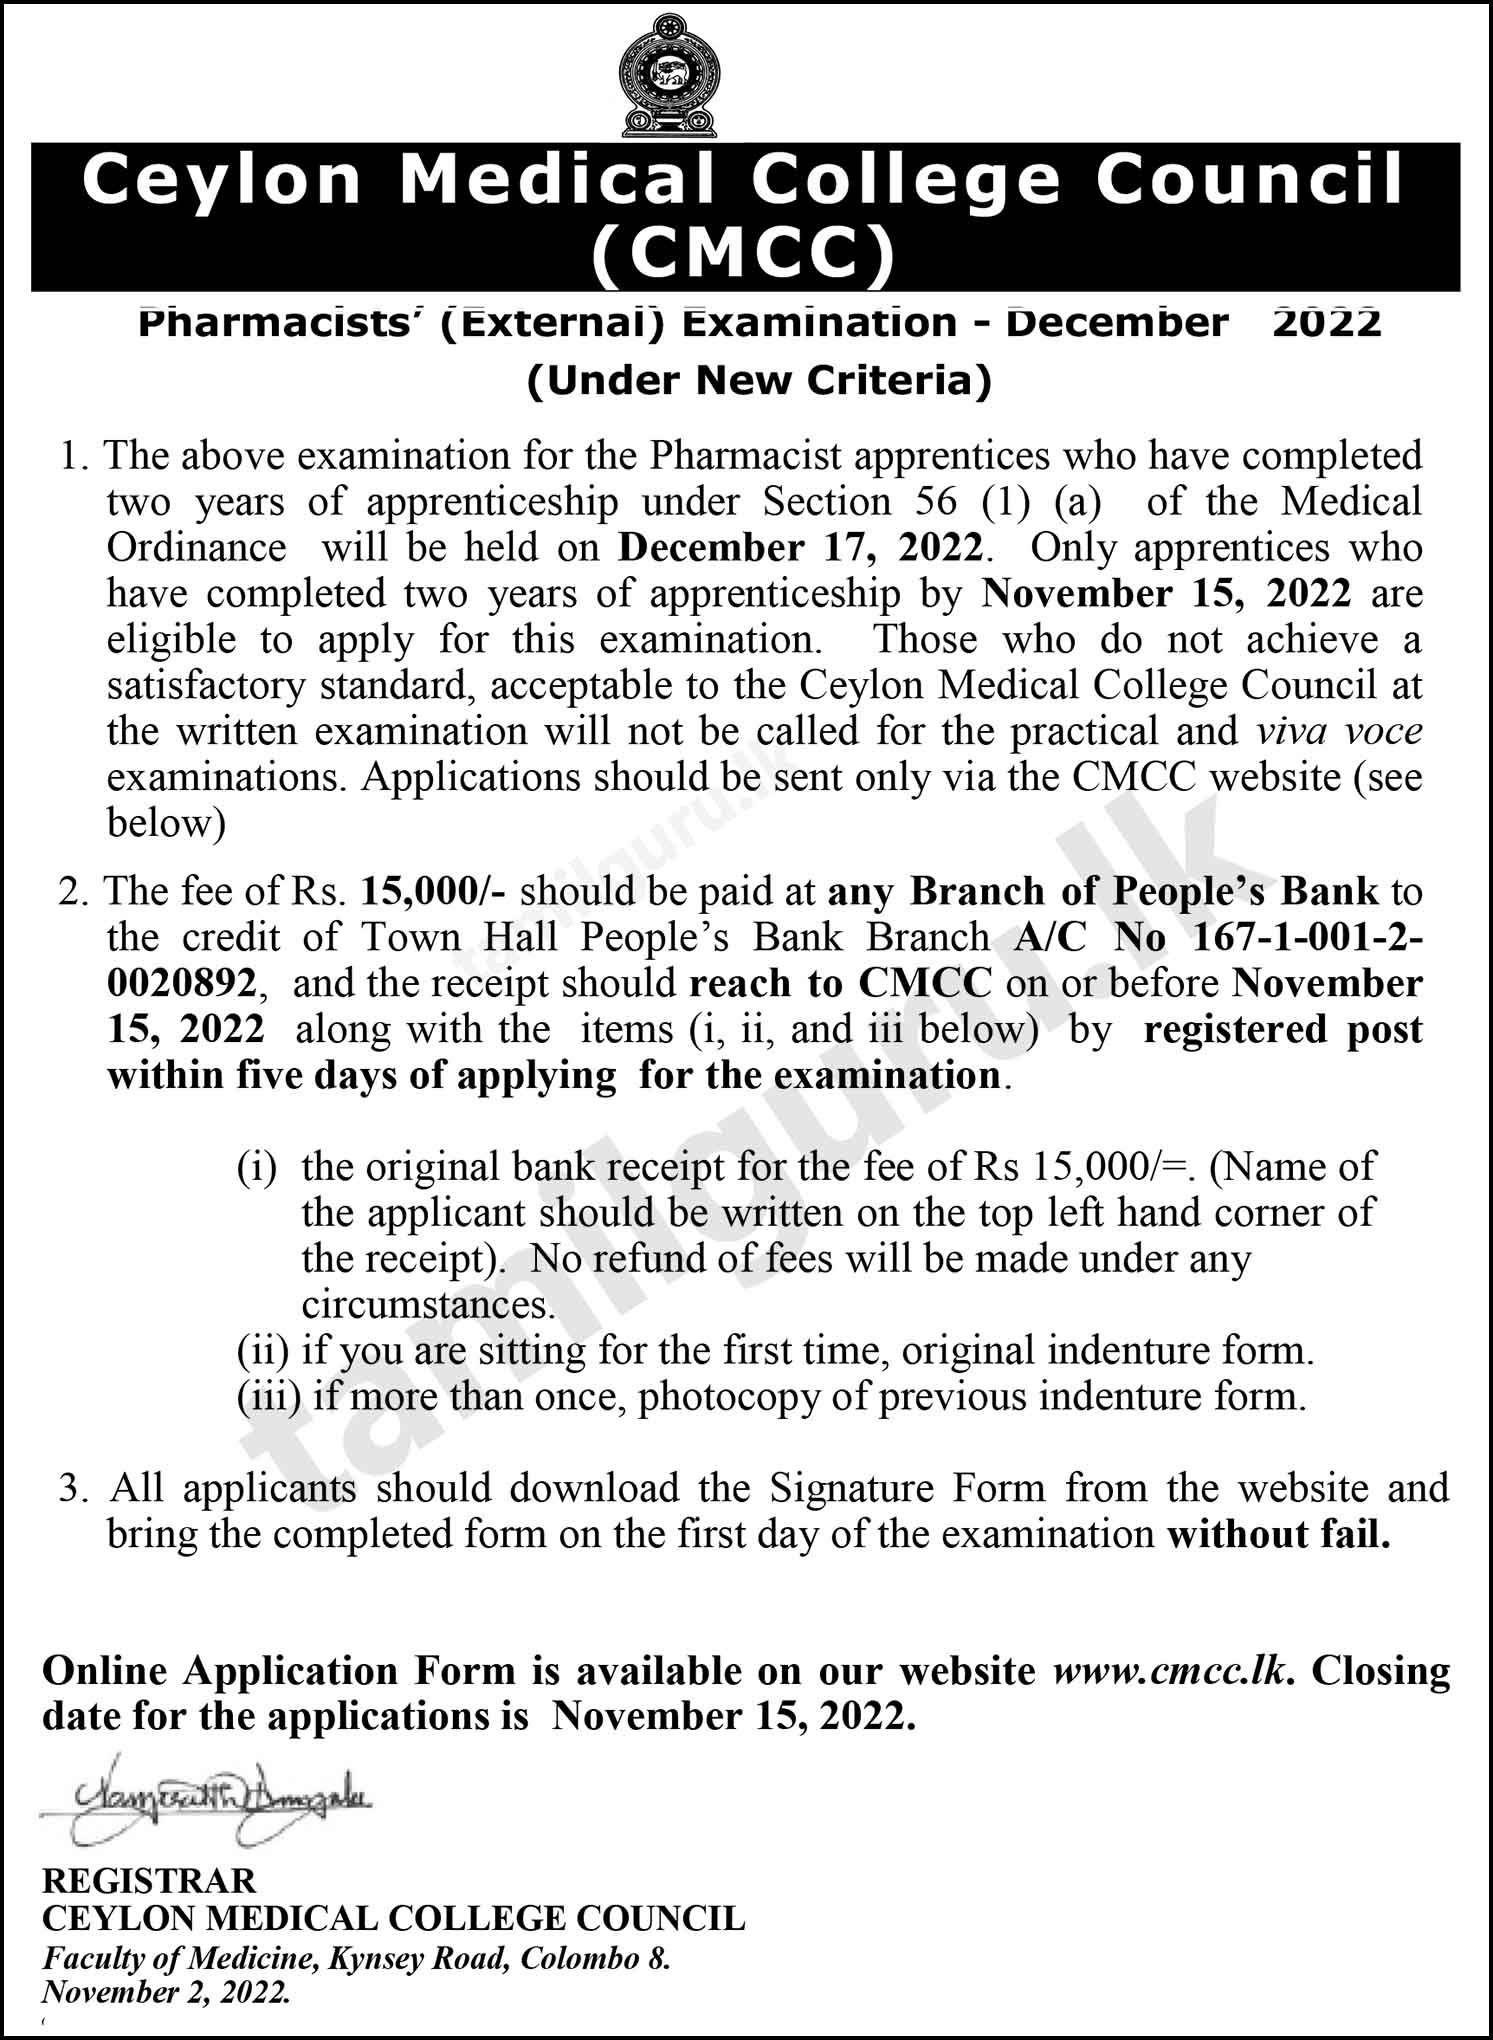 External Pharmacists Examination Application 2022 - Ceylon Medical College Council (CMCC)